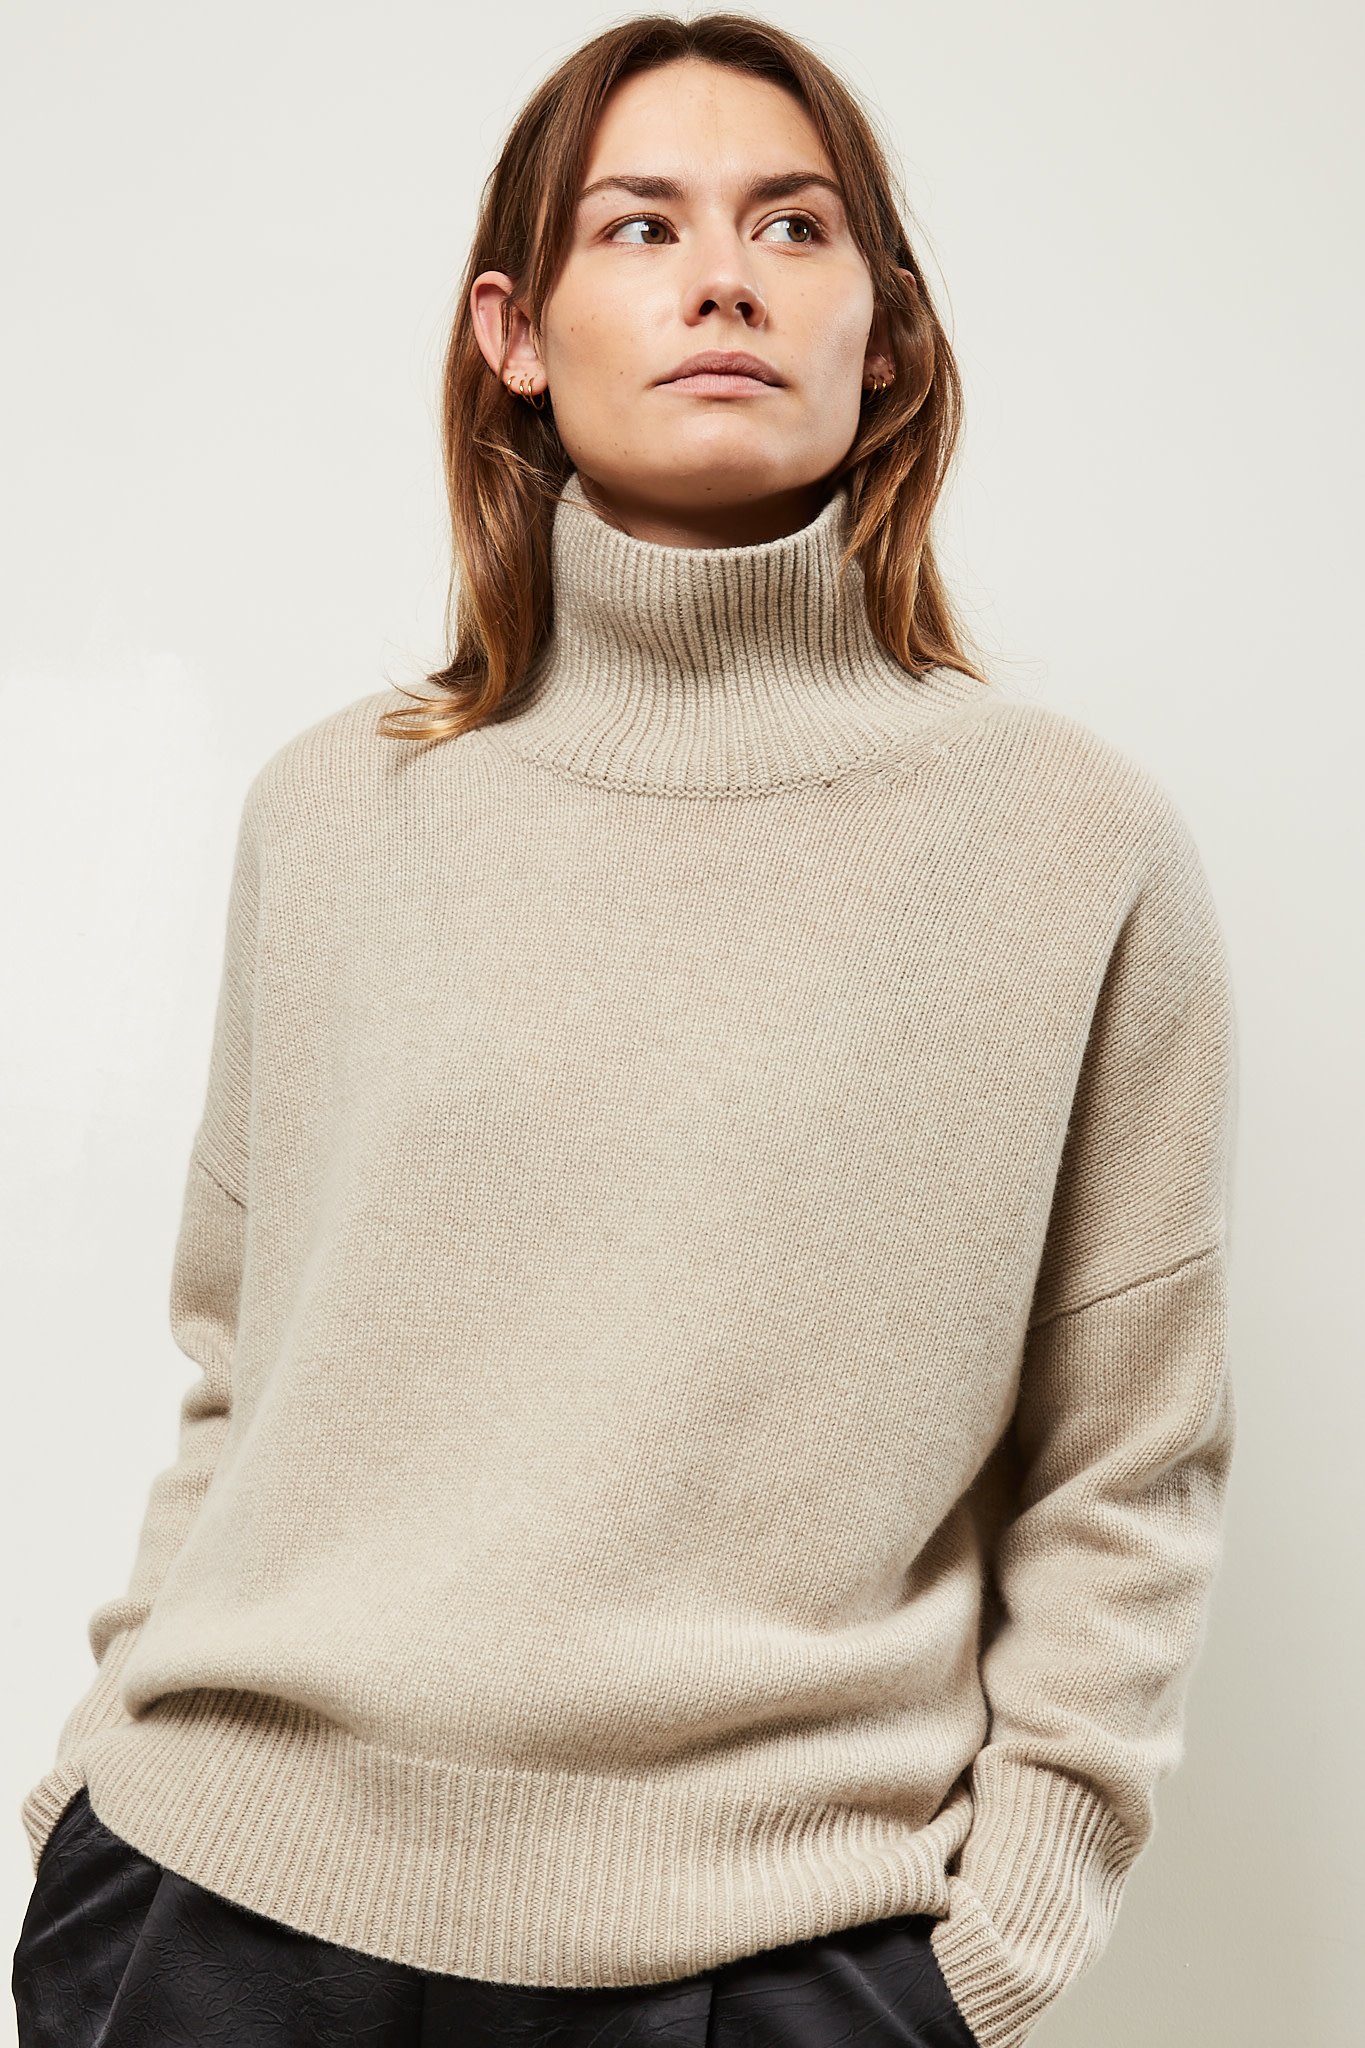 Lisa Yang - Heidi sweater